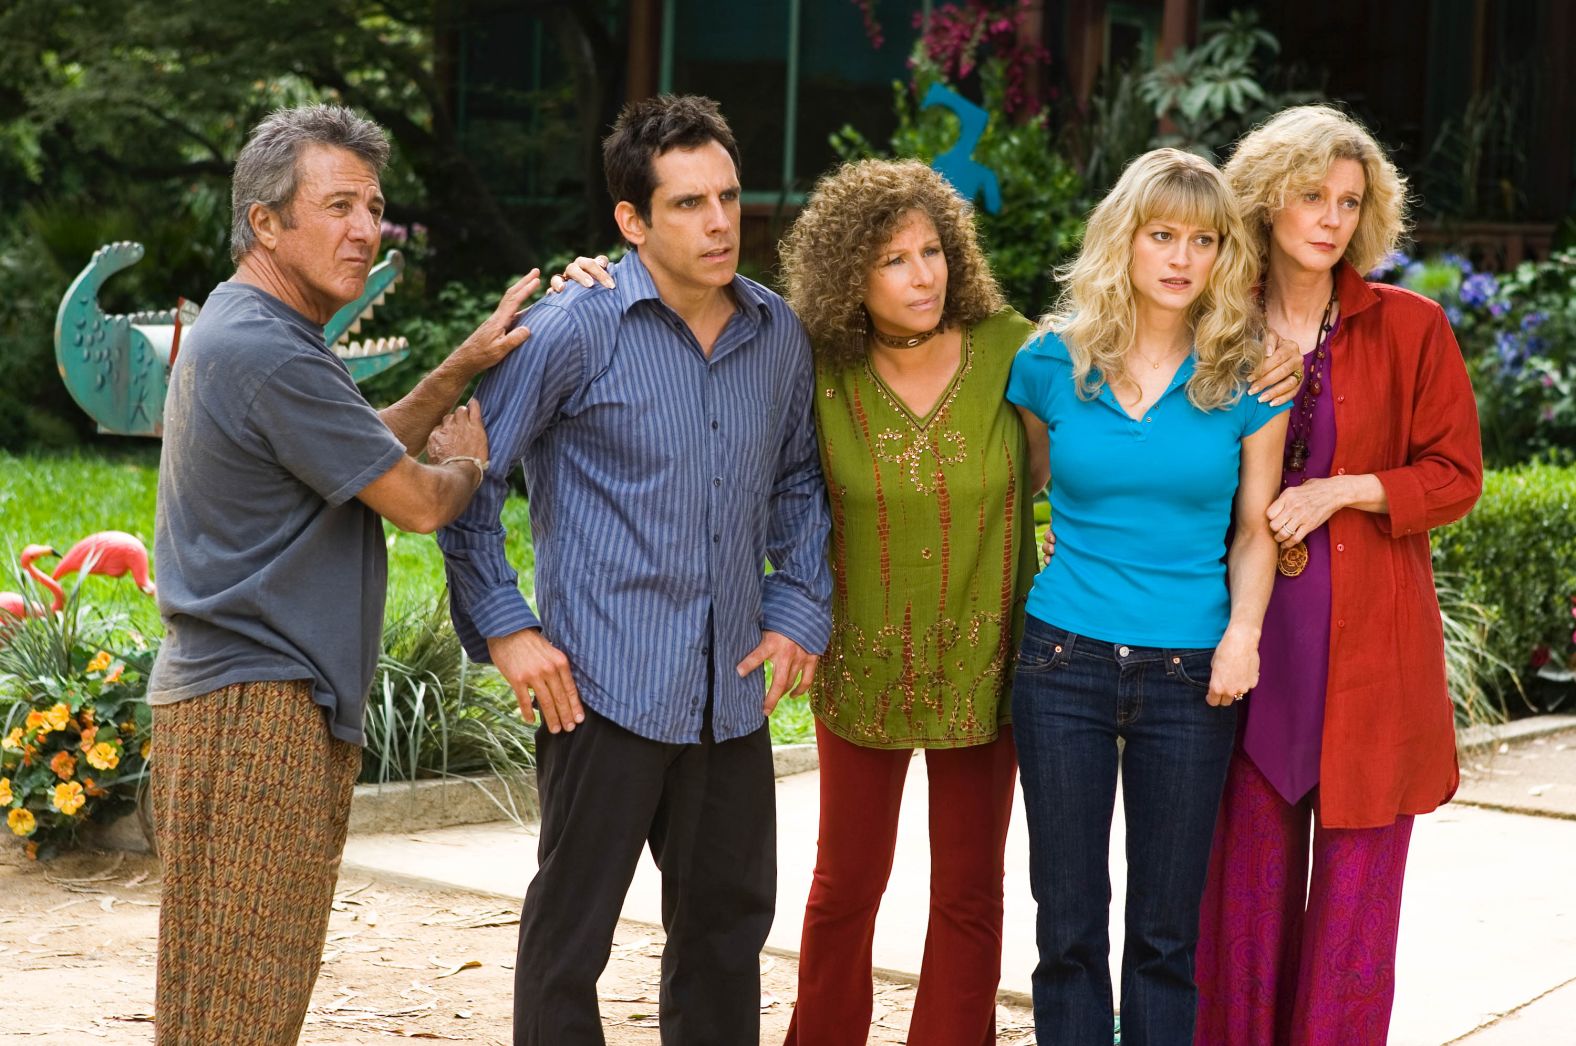 From left, Dustin Hoffman, Ben Stiller, Streisand, Teri Polo and Blythe Danner appear in the 2004 film "Meet the Fockers."